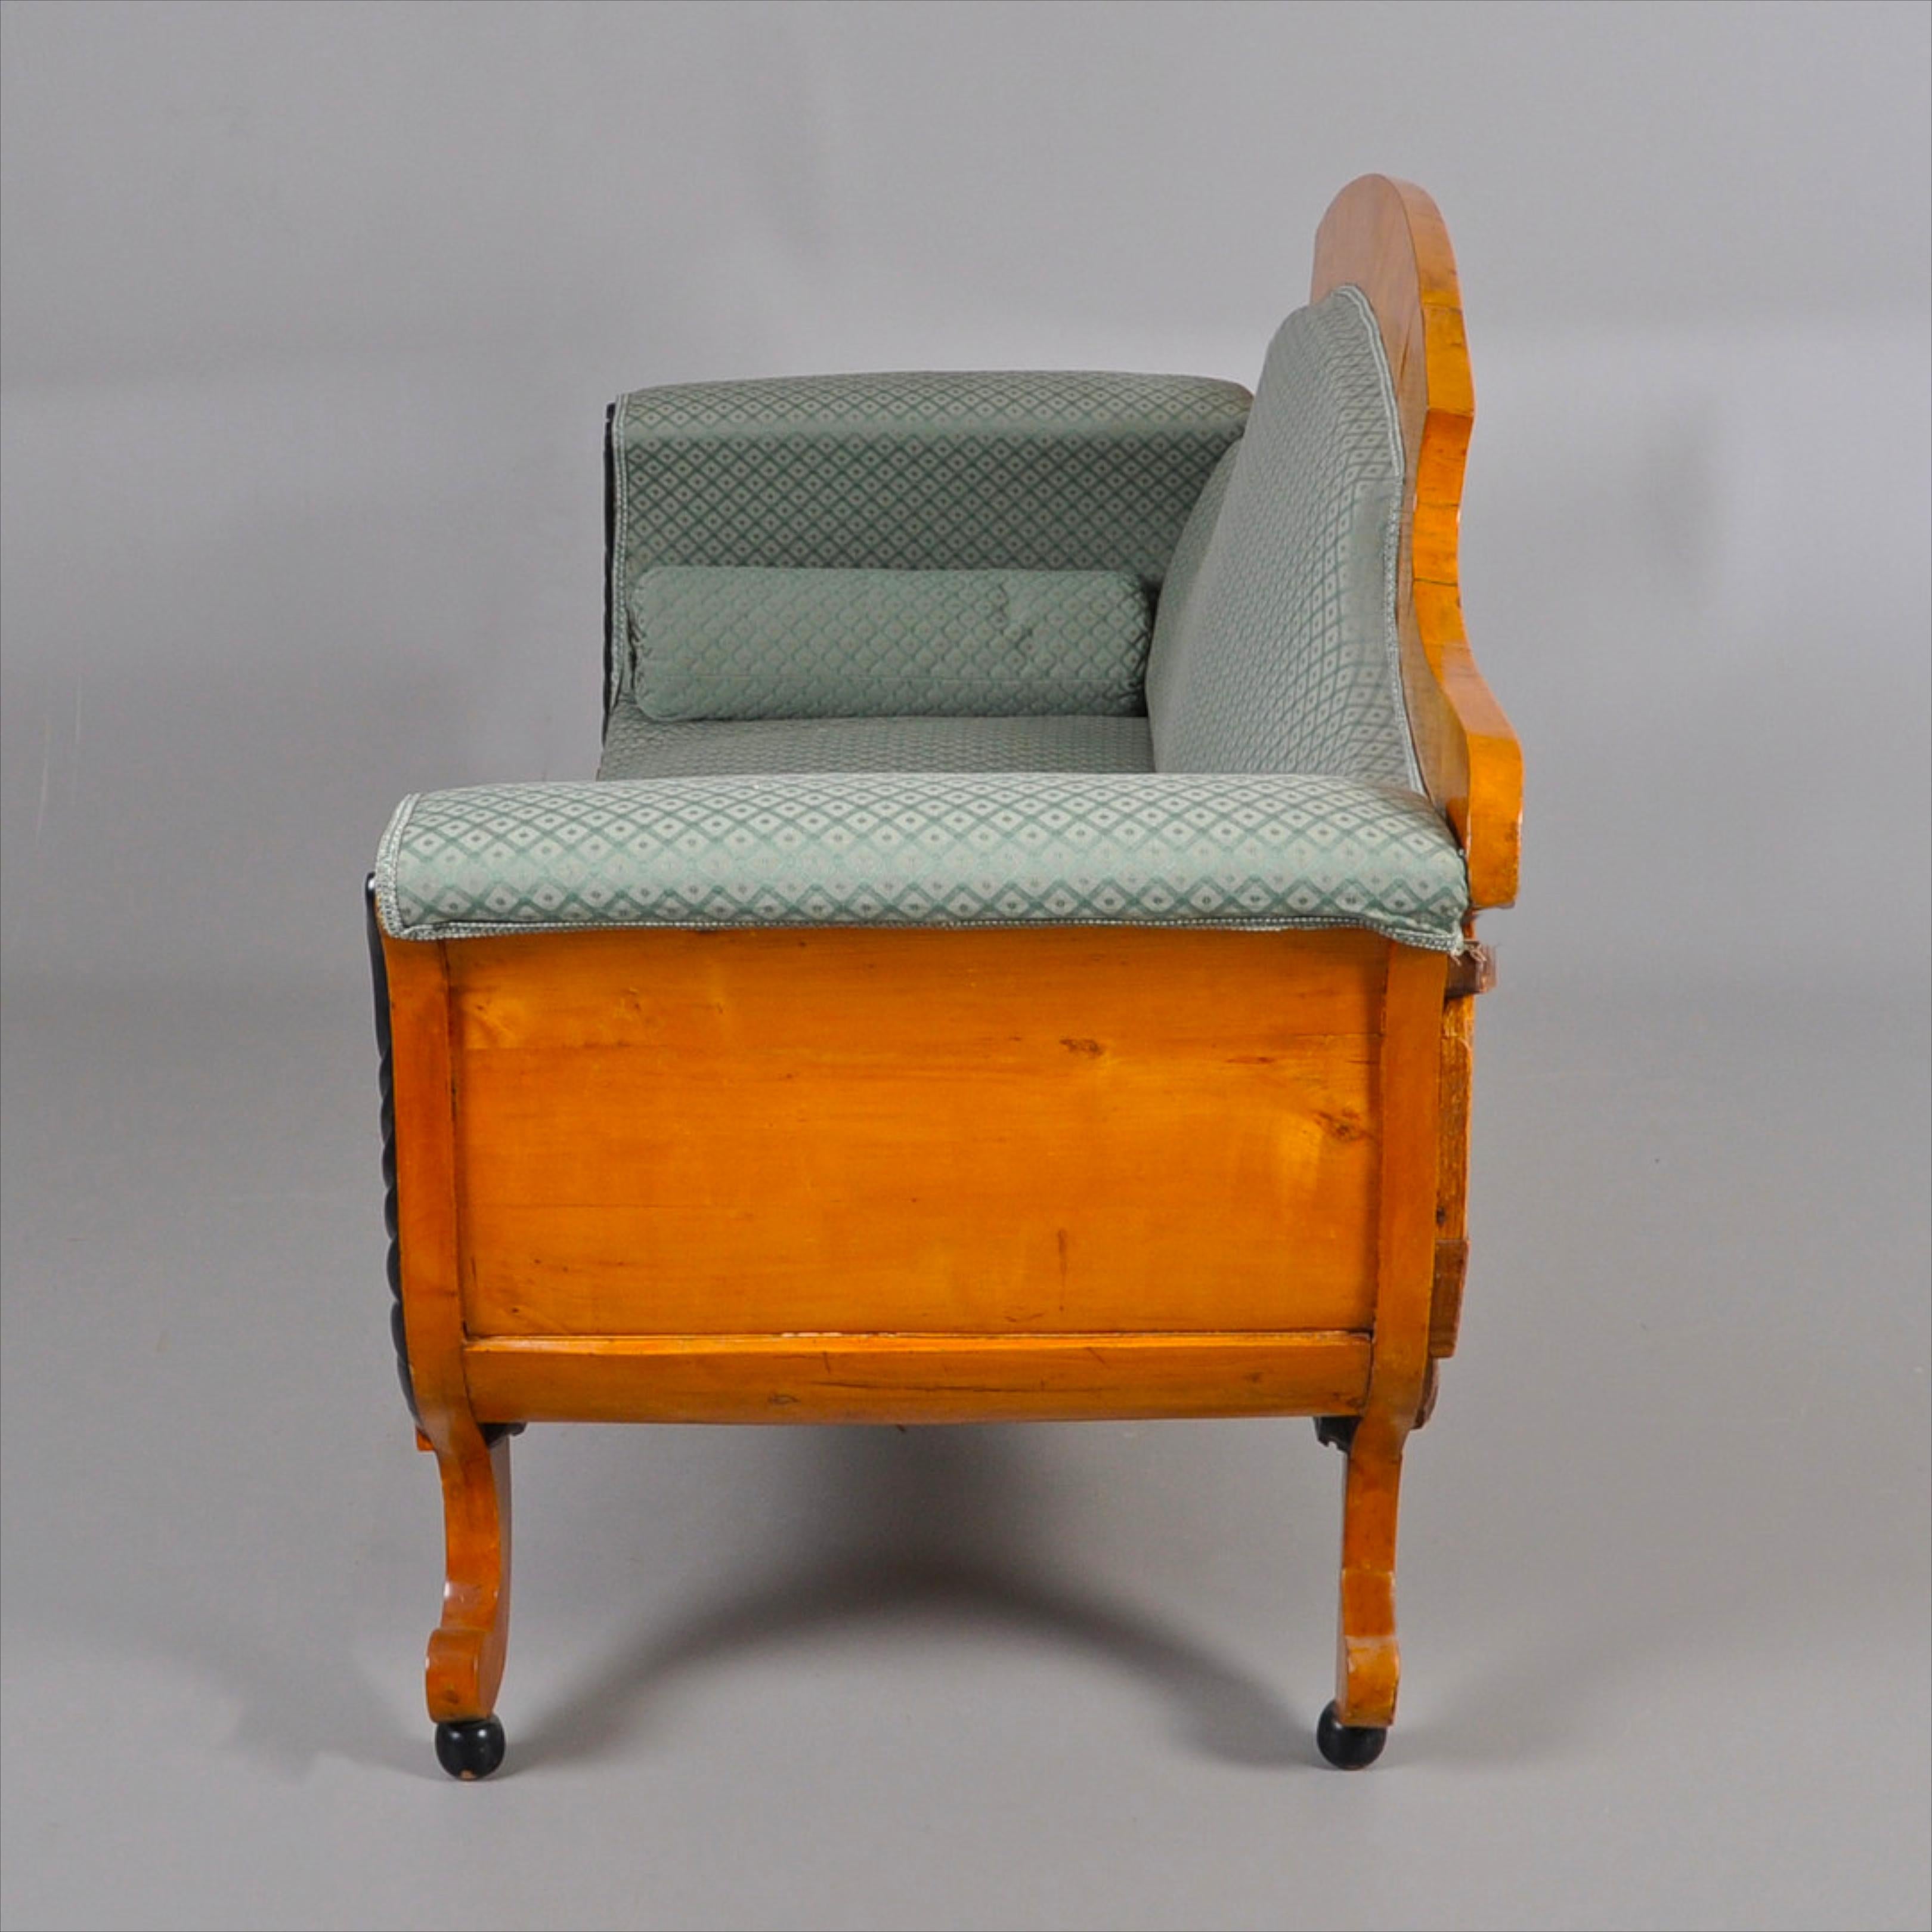 Veneer Swedish Biedermeier Sofa Empire Couch Honey Color, 2-3 Seat, 19th Century Ormolu